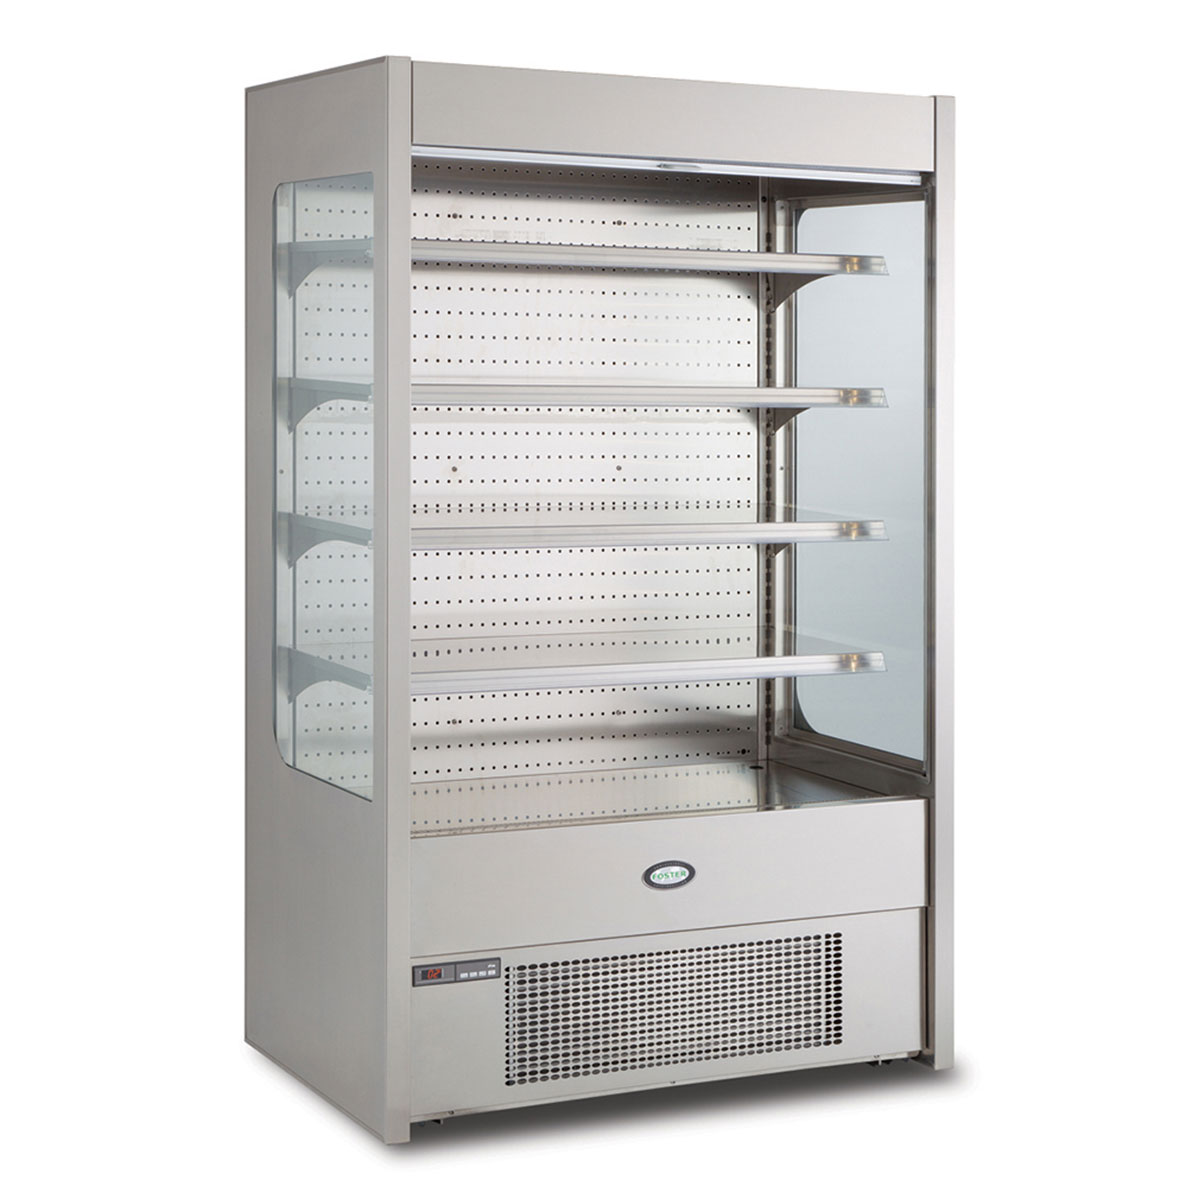 Foster Pro Multidecks 1 - Refrigeration Equipment Suppliers in Cornwall